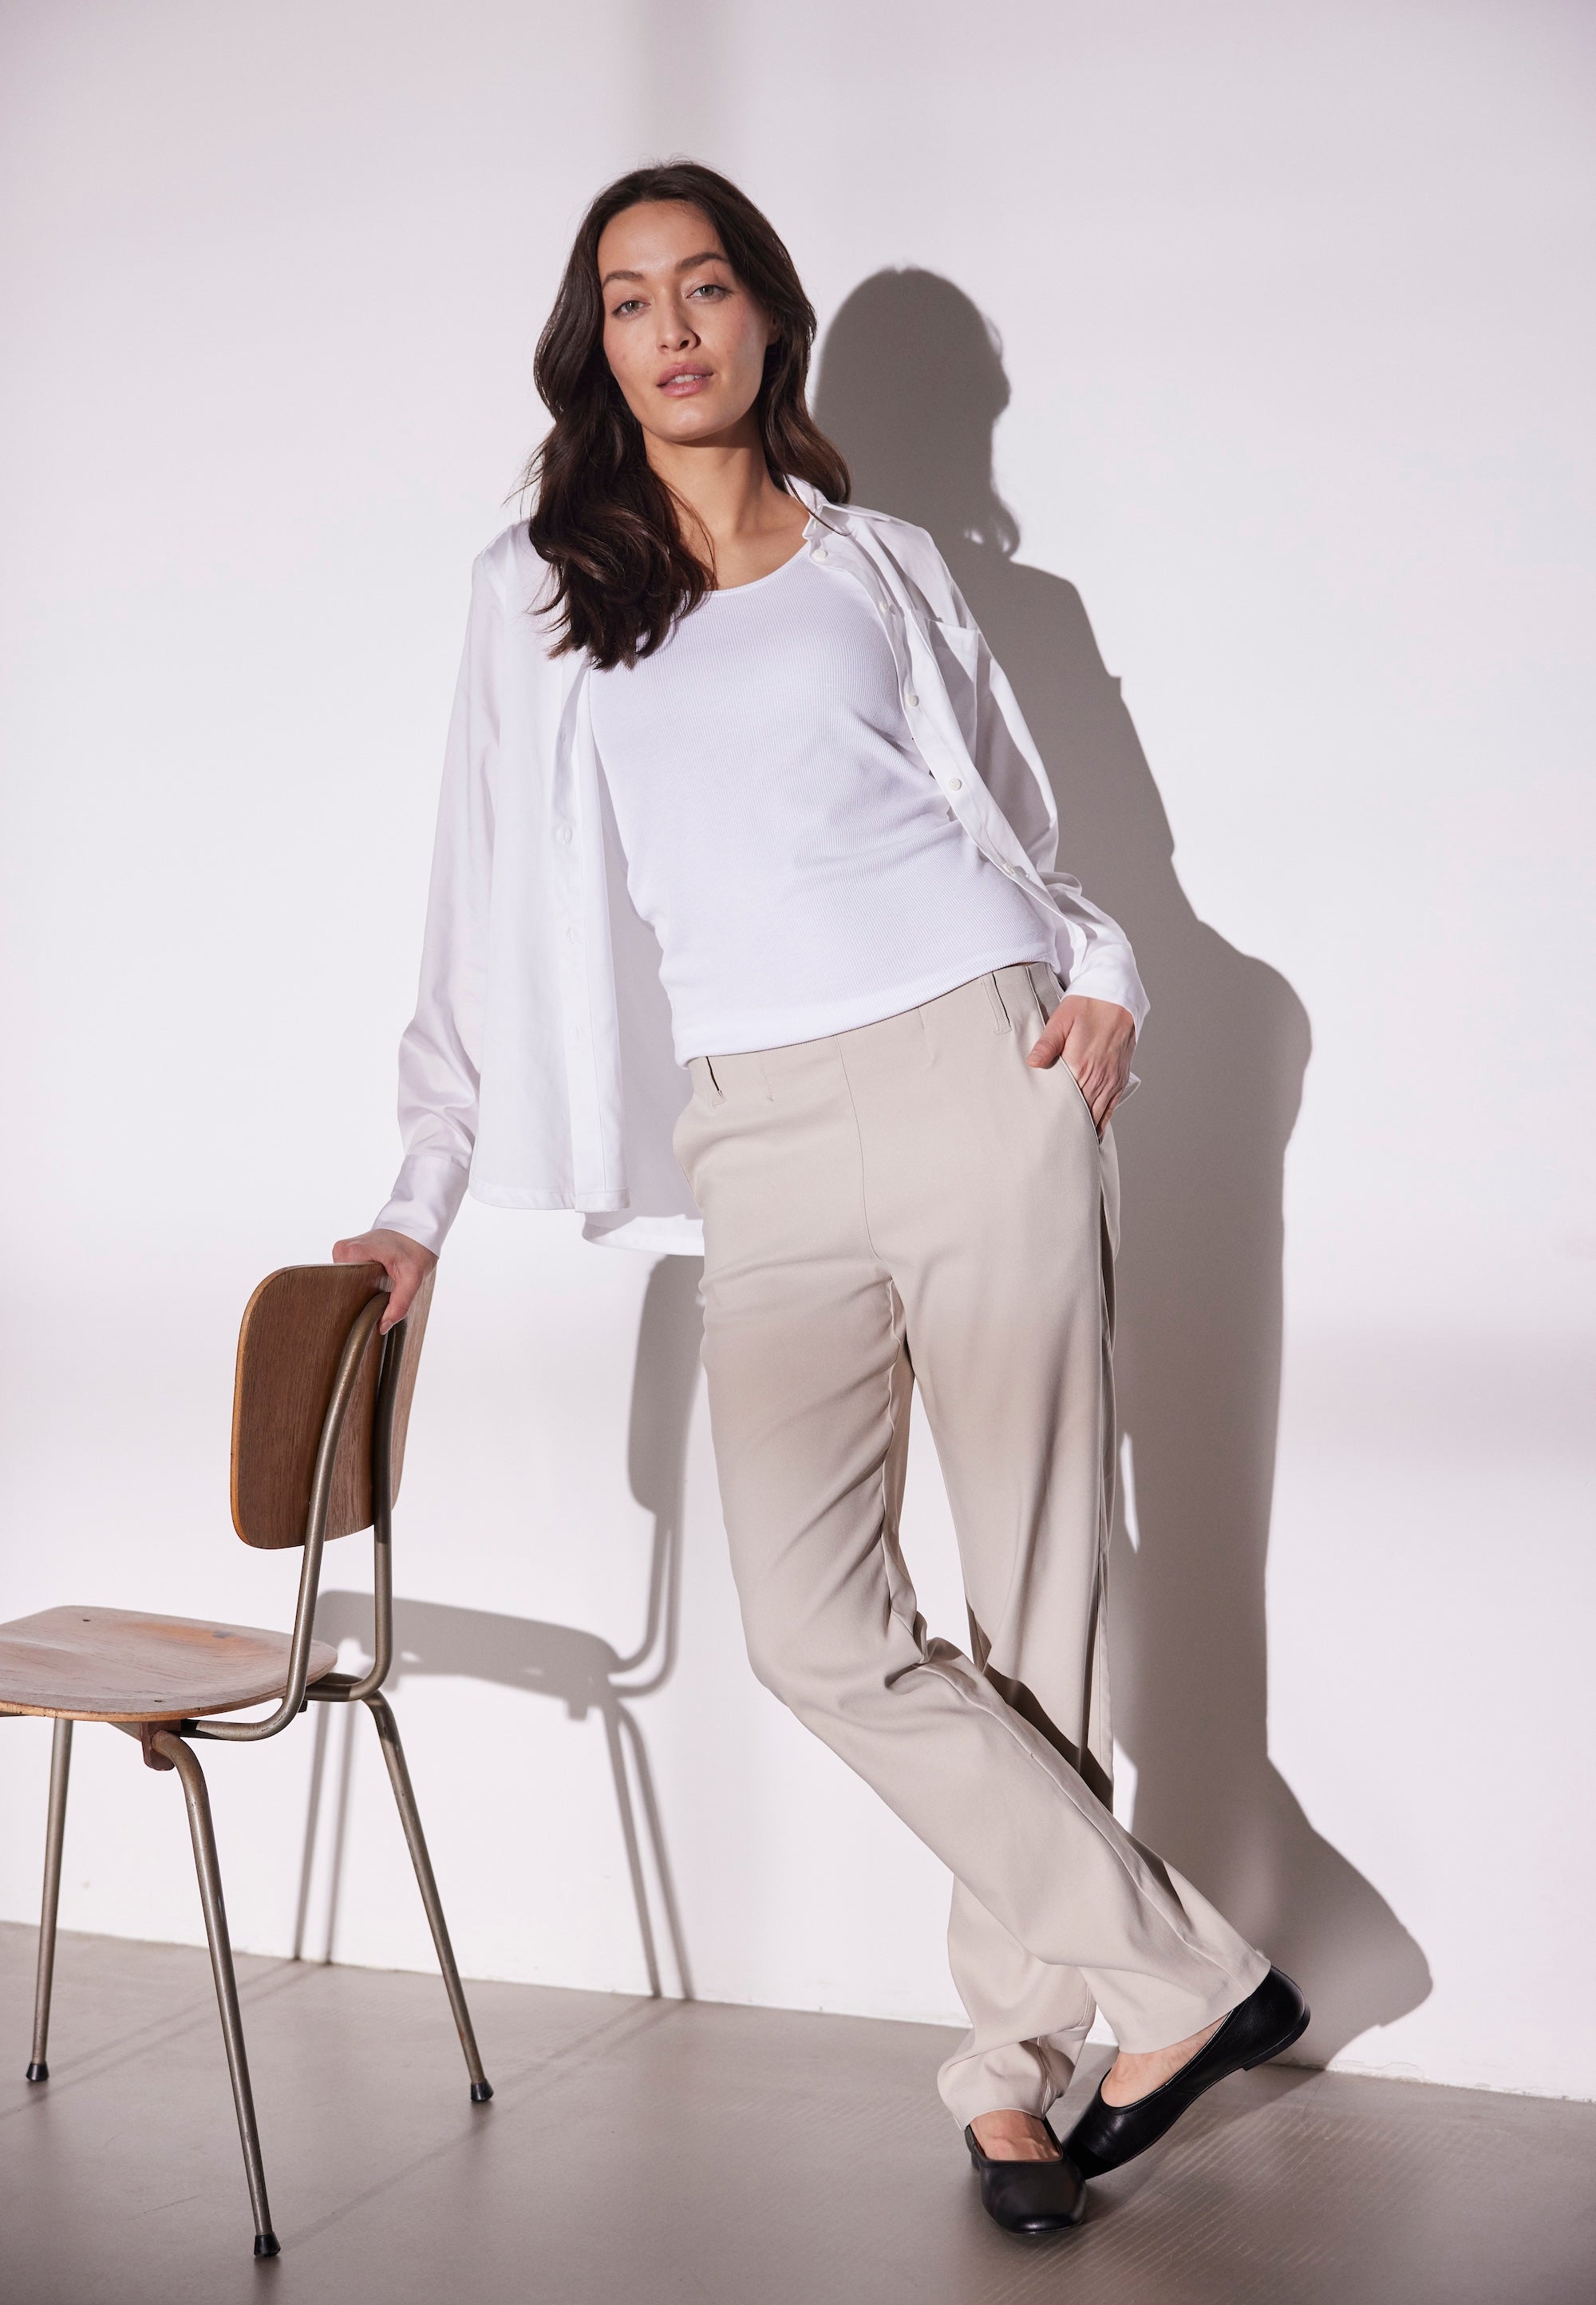 LAURIE  Taylor Regular - Medium Length Trousers REGULAR 25000 Grey Sand